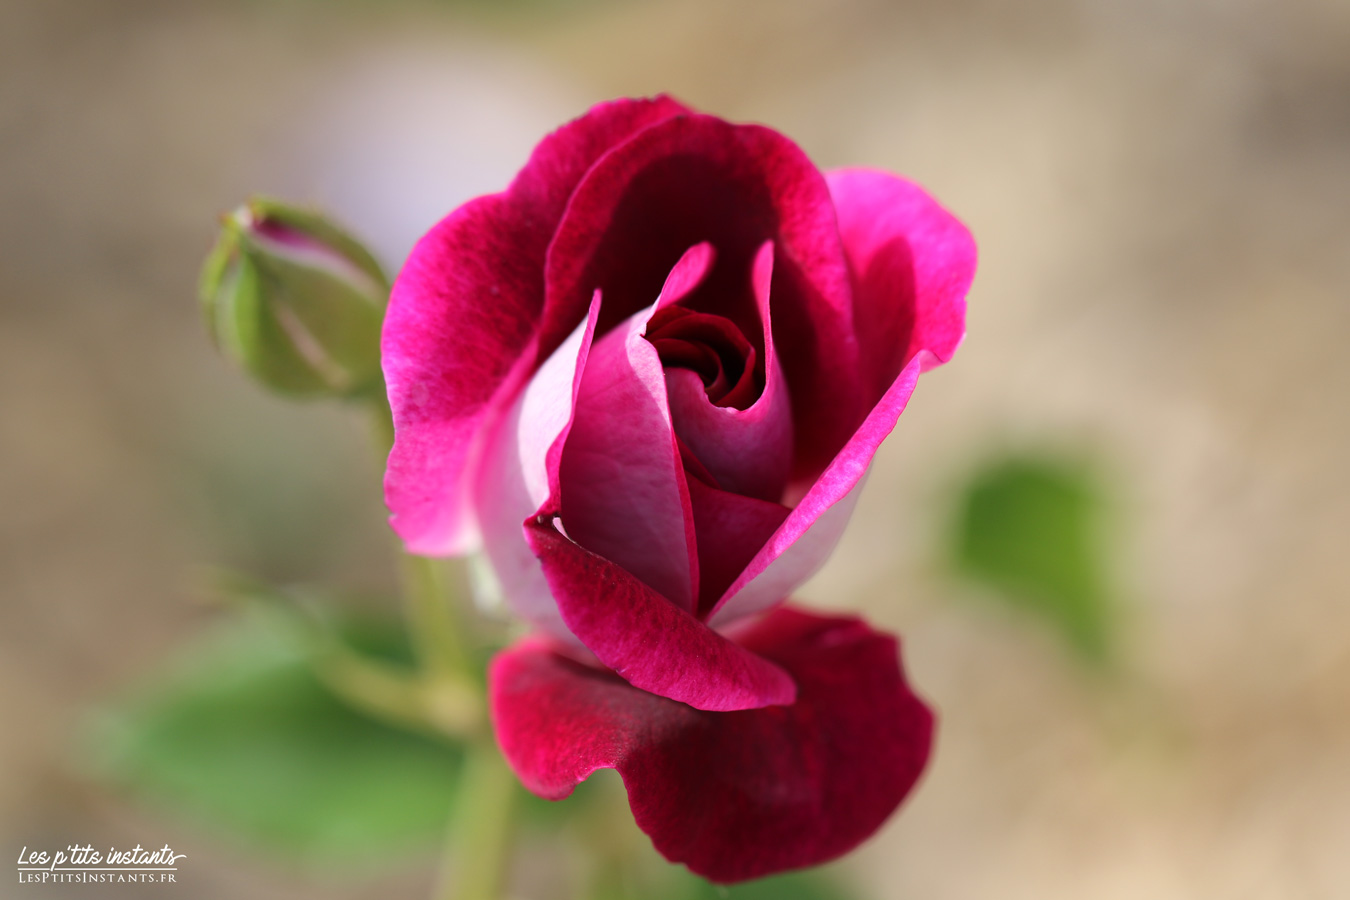 “Burgundy Ice” roses